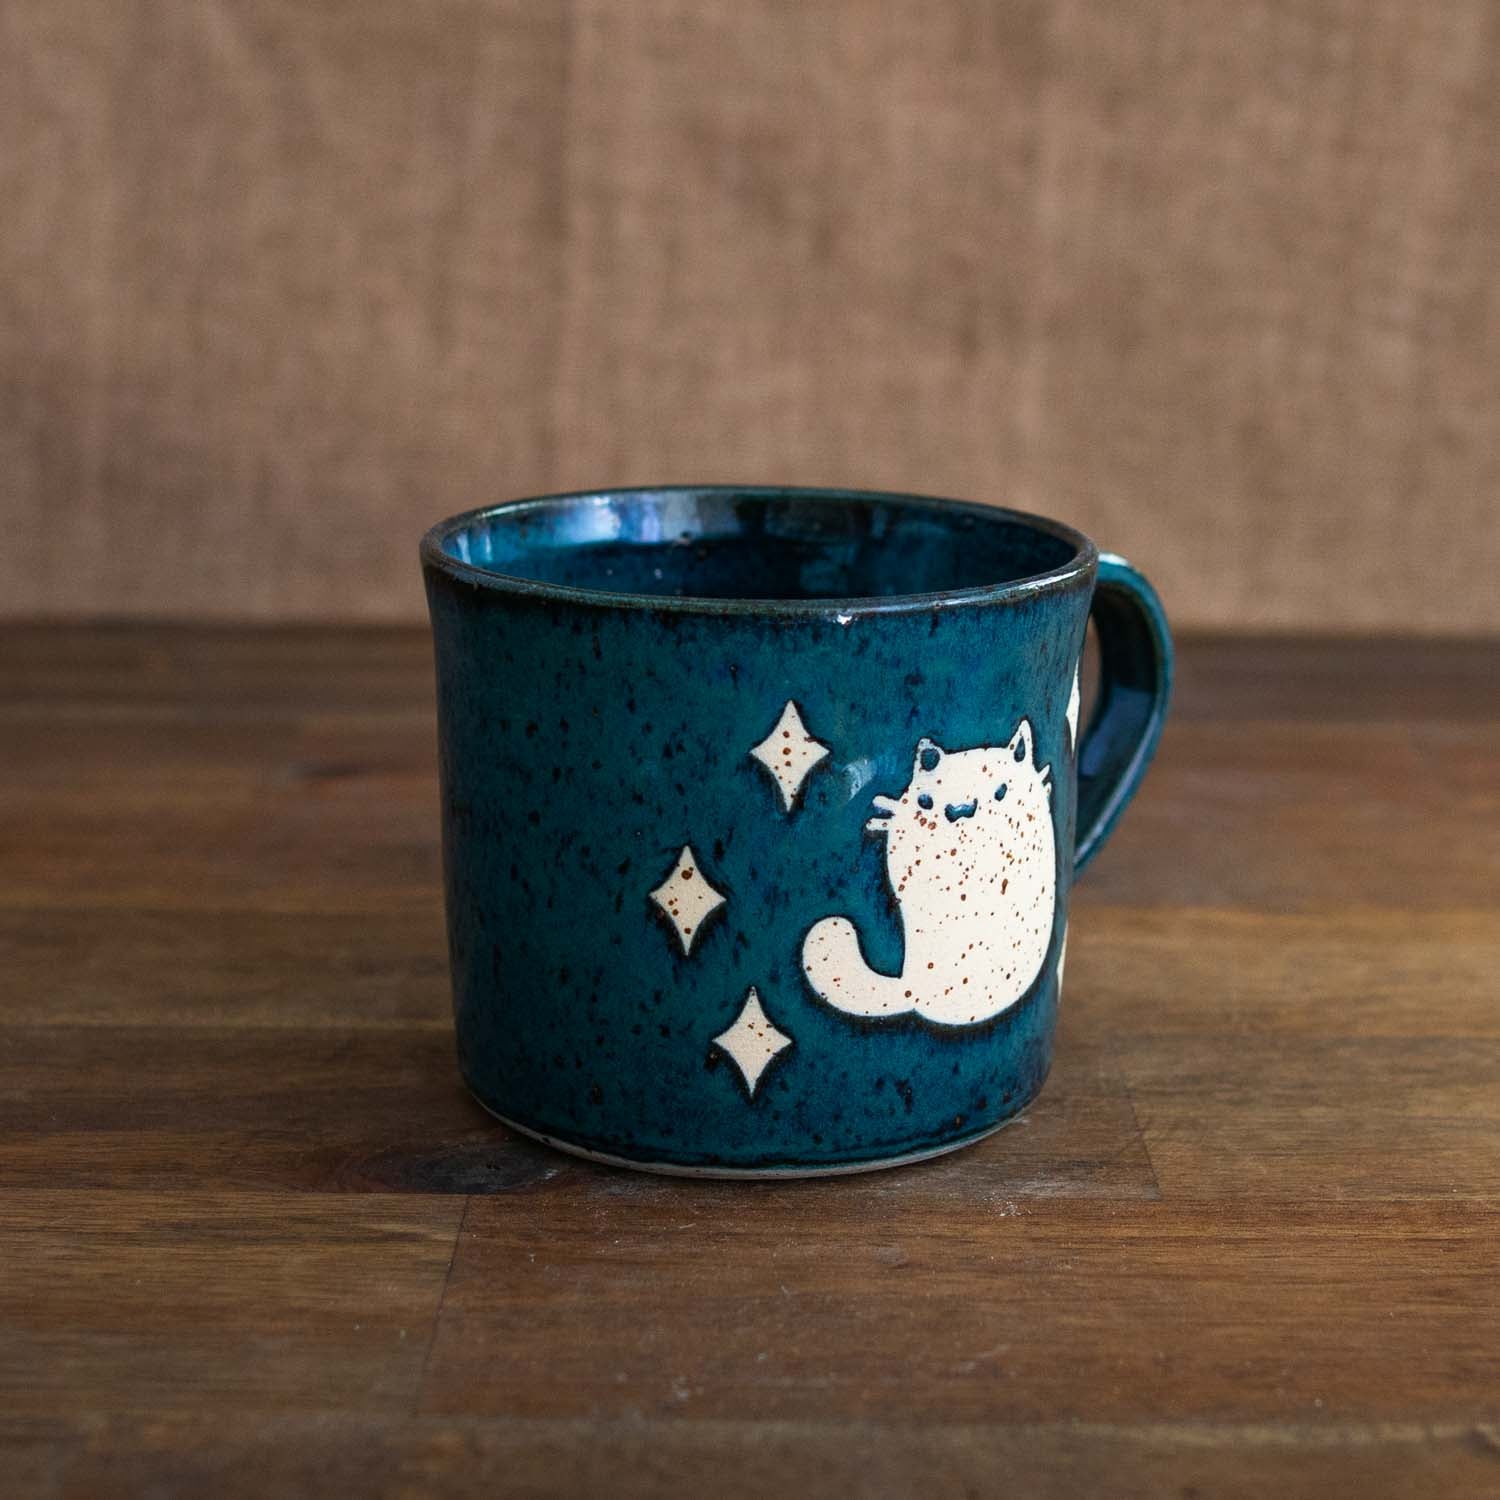 Chill space cat mug - 350 ml (12 oz)